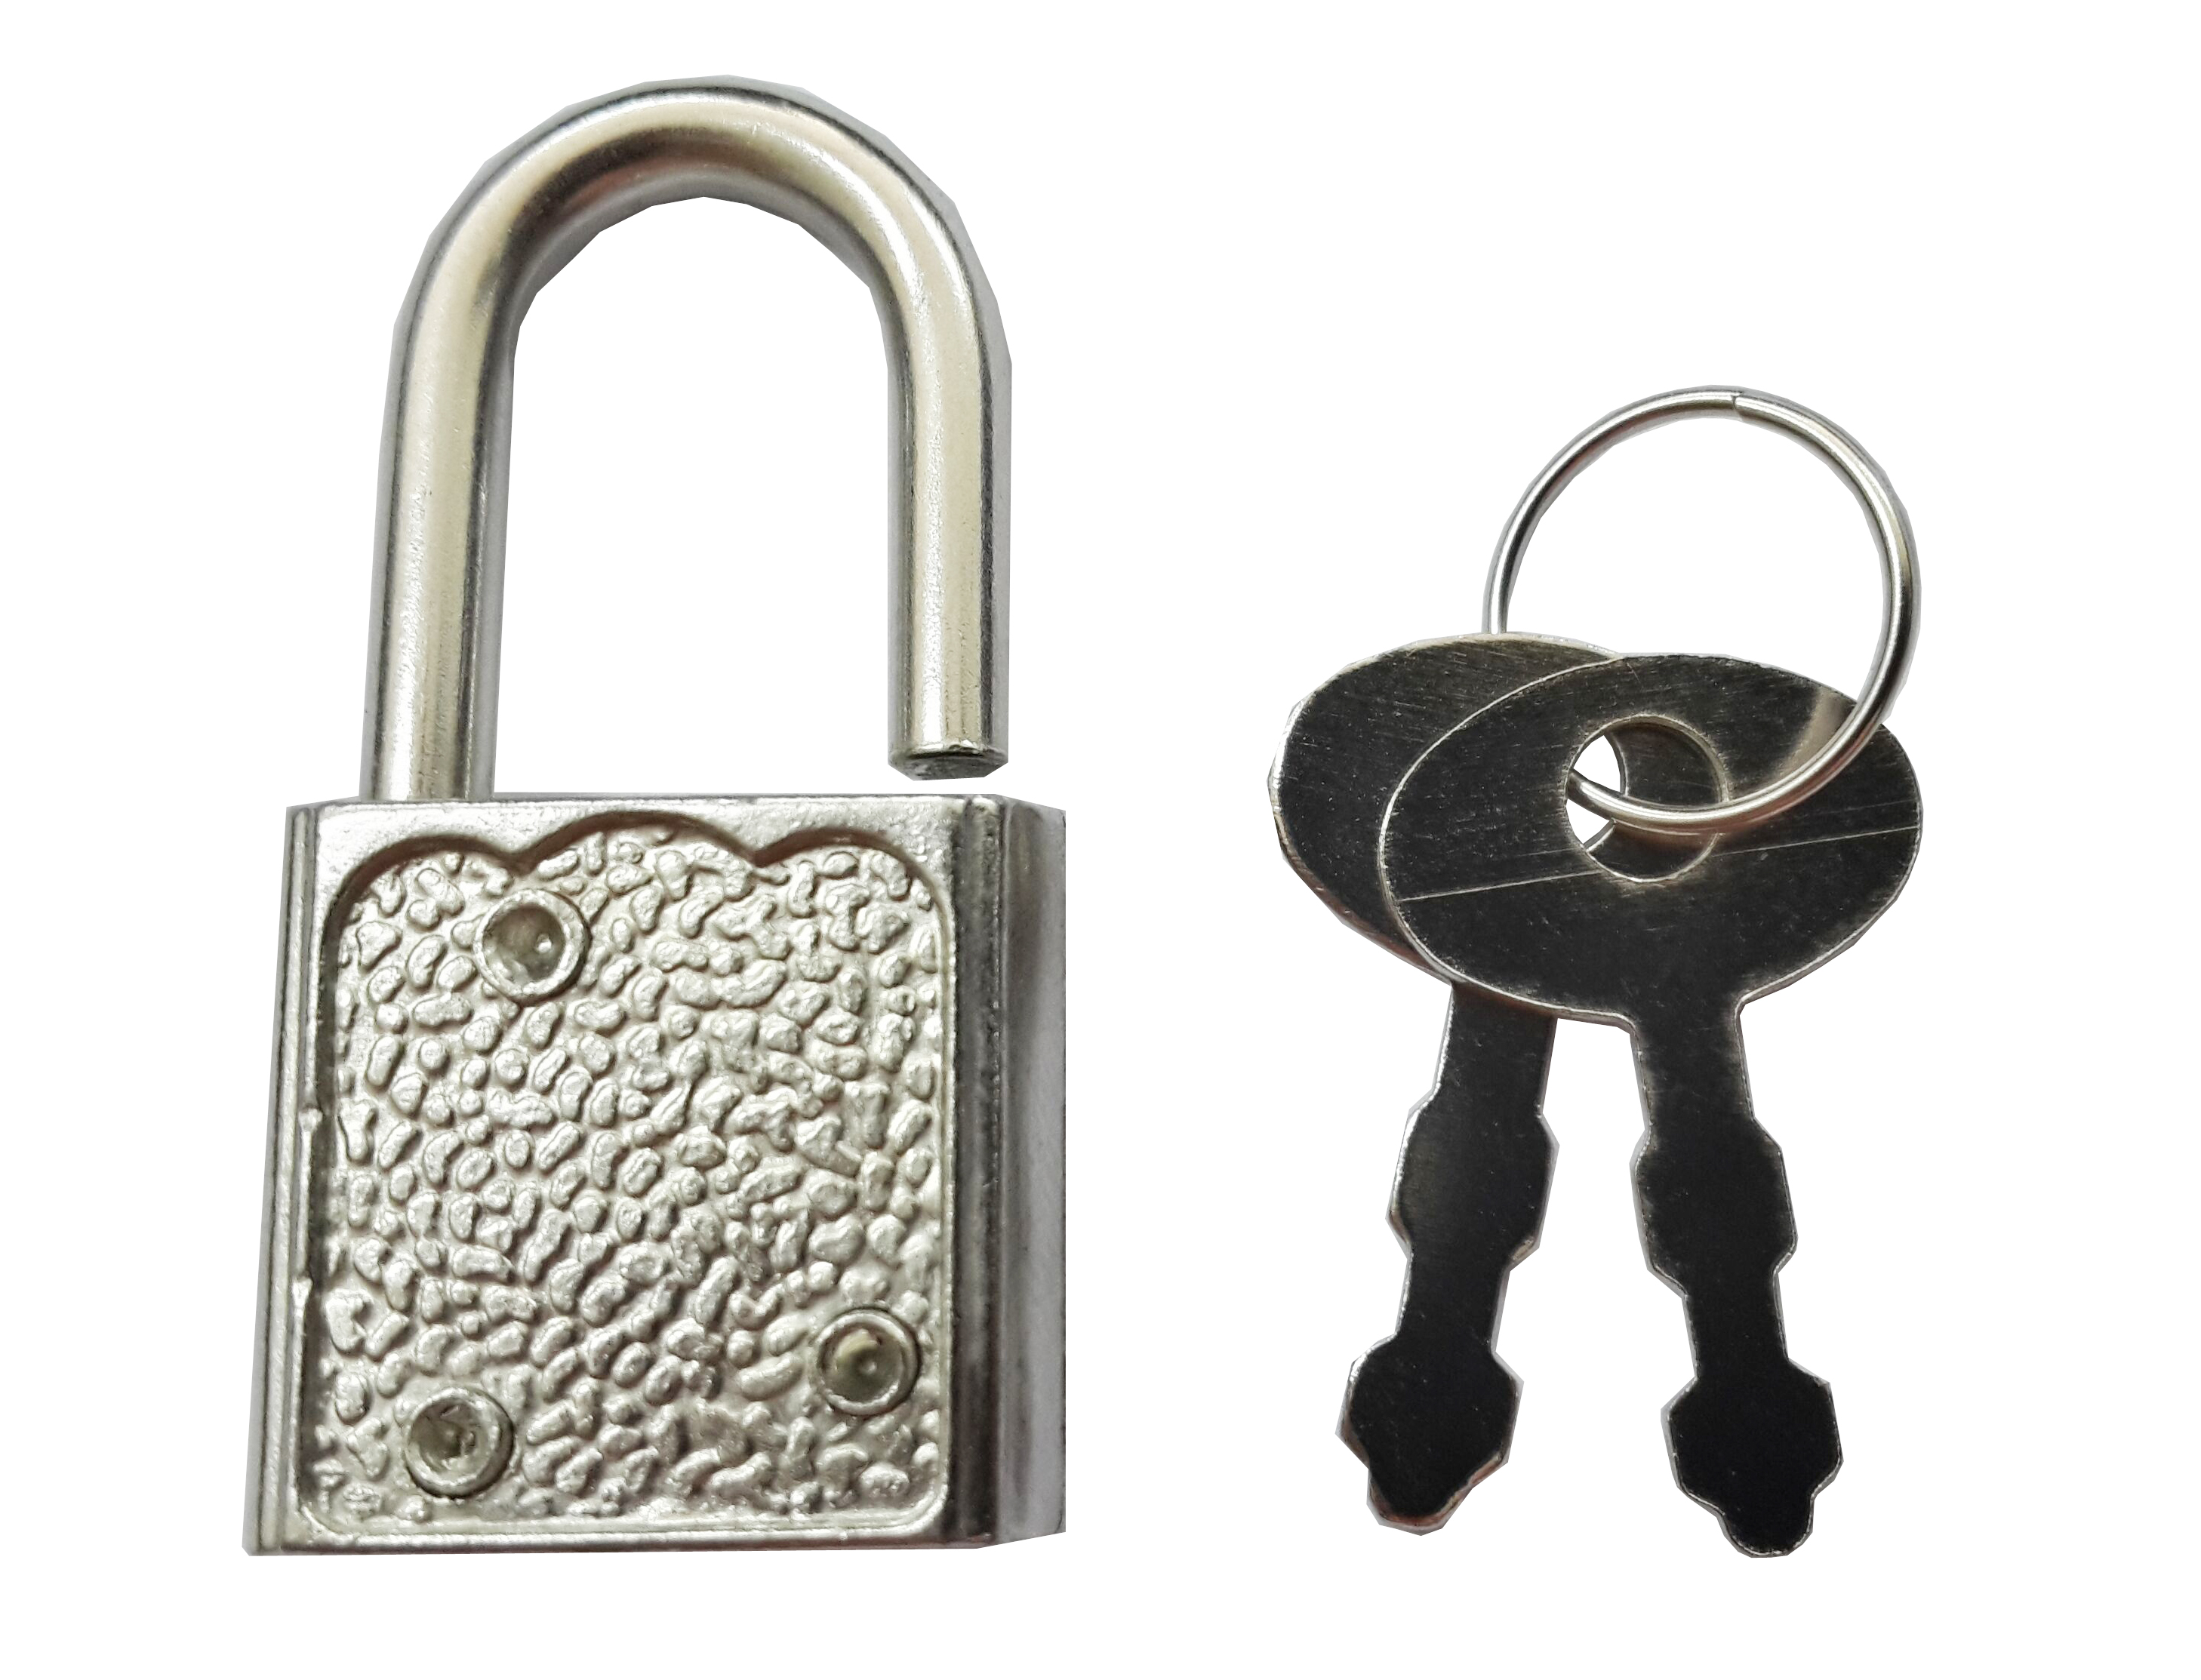 FixtureDisplays Small Metal Padlock Mini Tiny Box Luggage/Suitcase Craft Lock Key 11040Lock